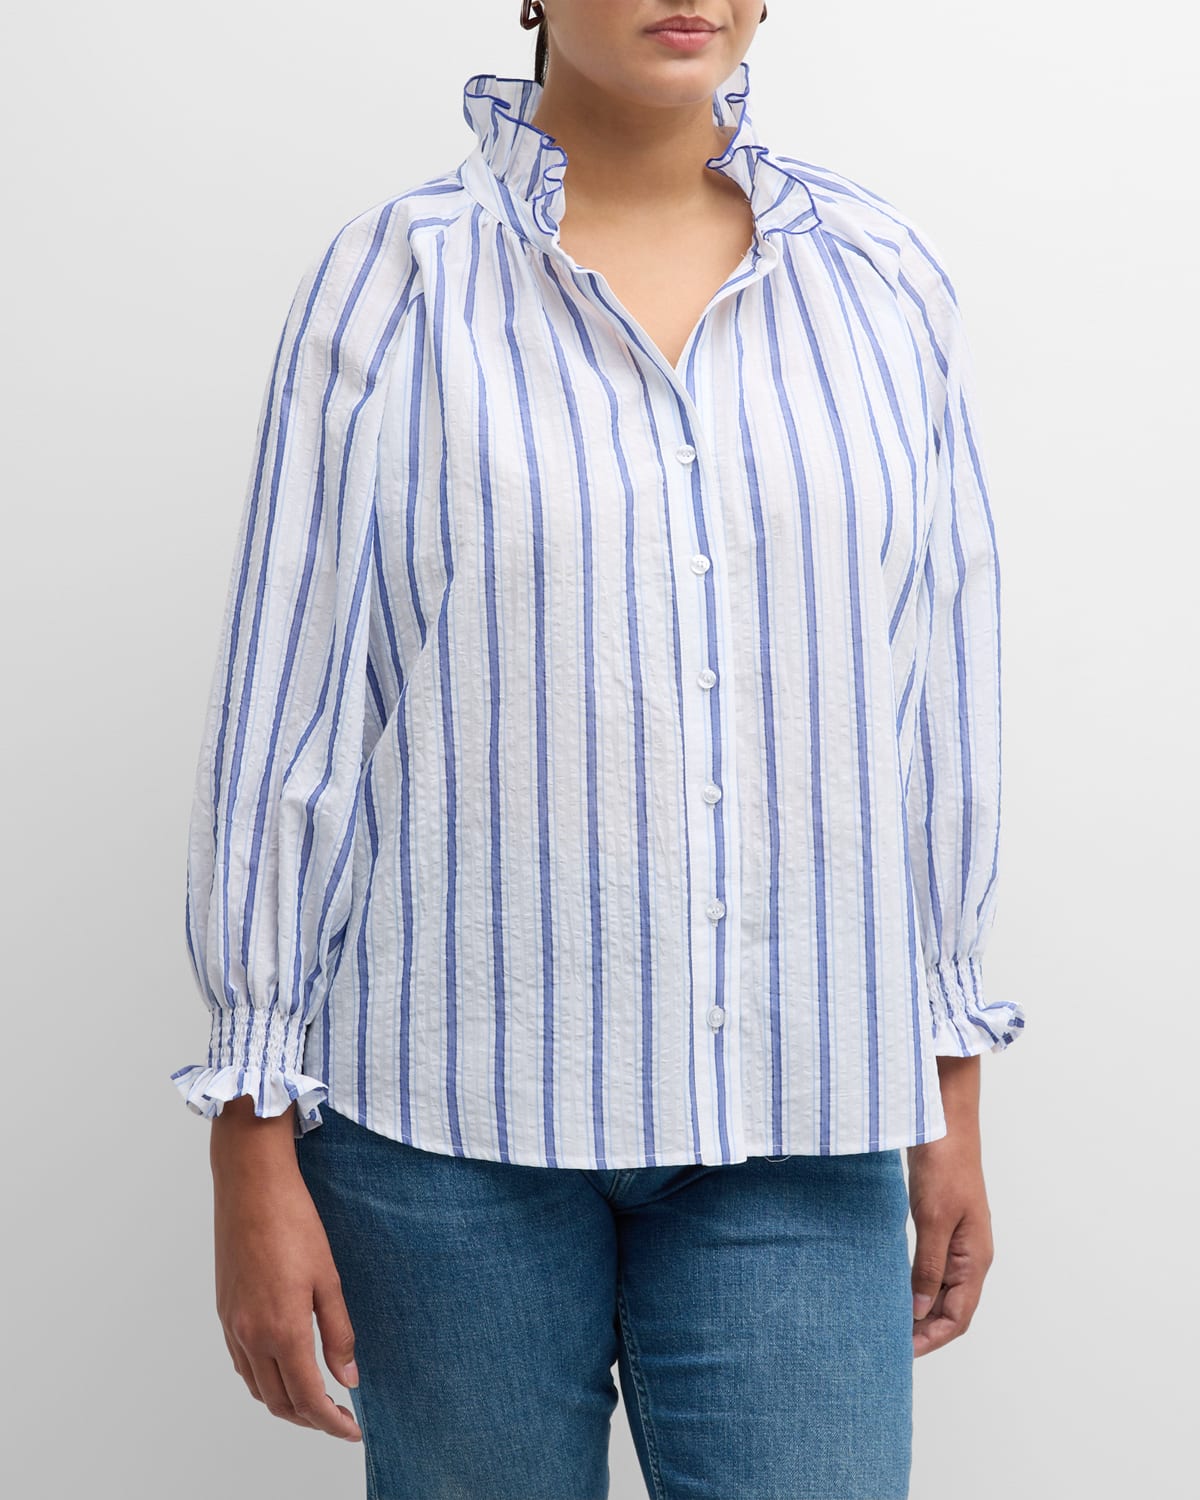 Finley Plus Size Fiona Striped Cotton Shirt In White/blue